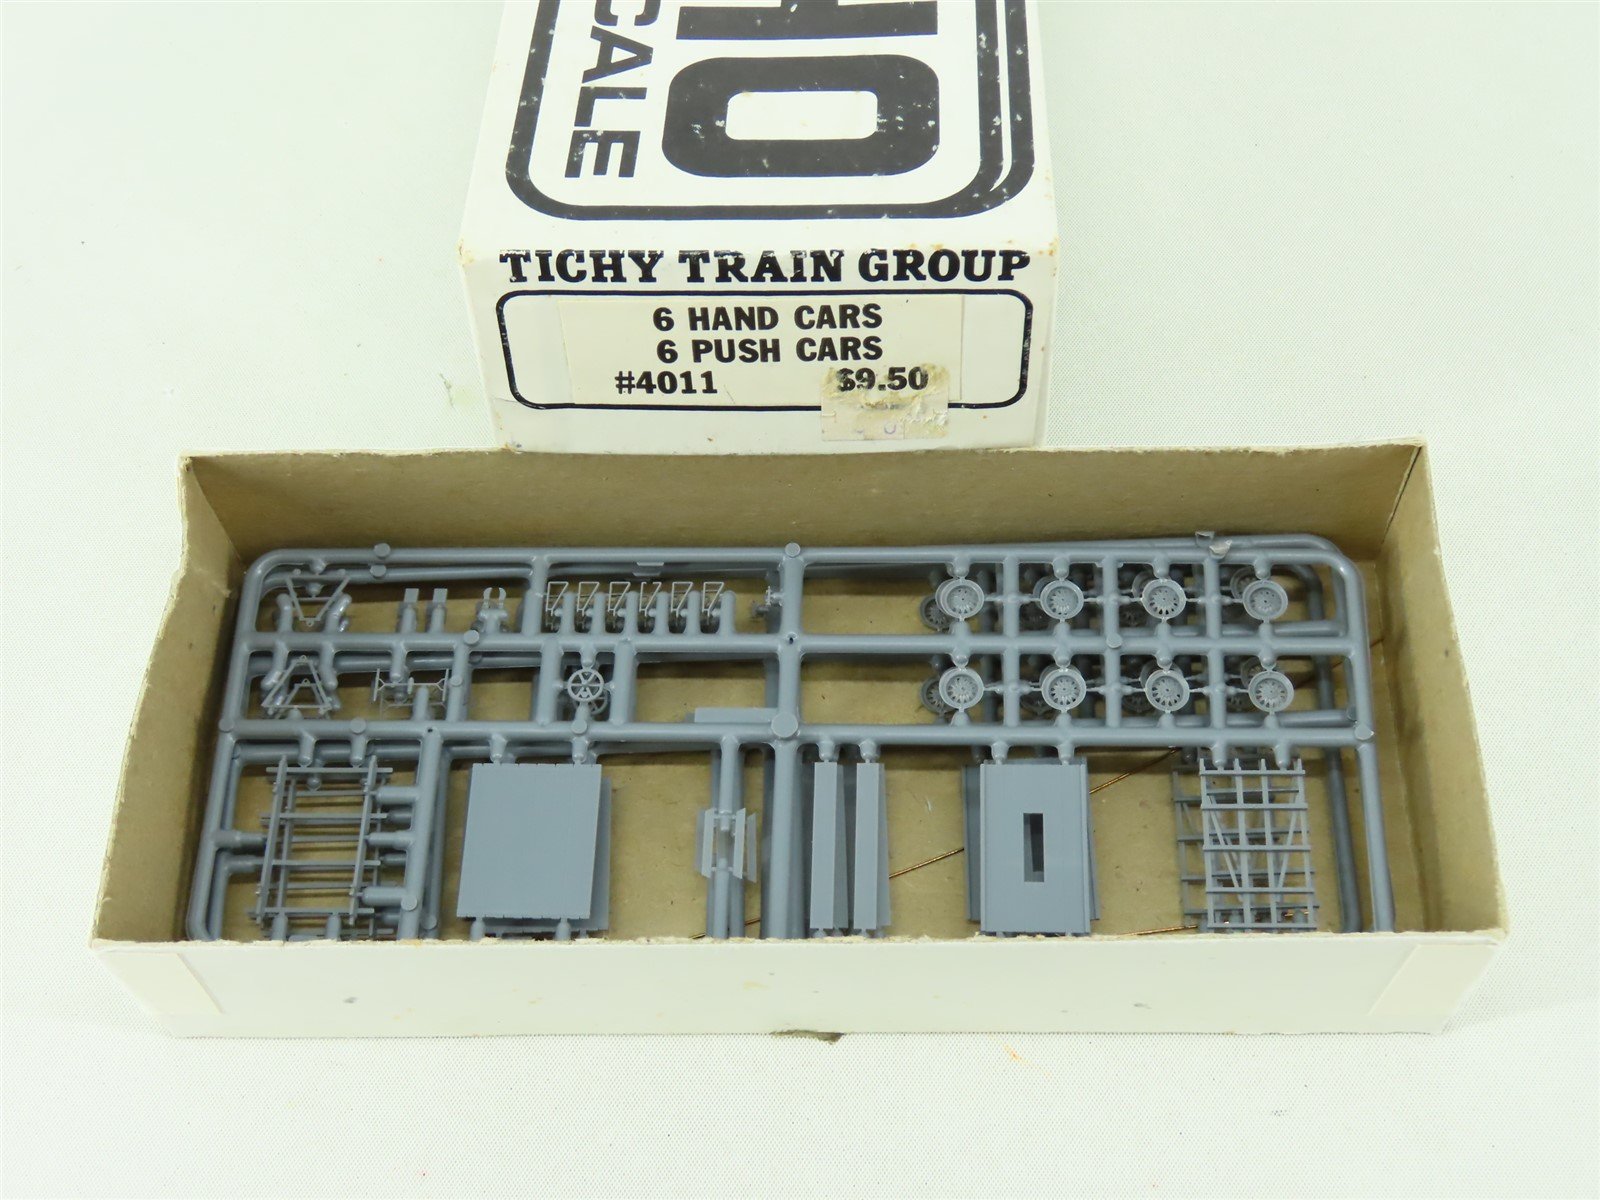 HO 1/87 Scale Tichy Train Group Kit #4011 6 Hand Cars & 6 Push Cars